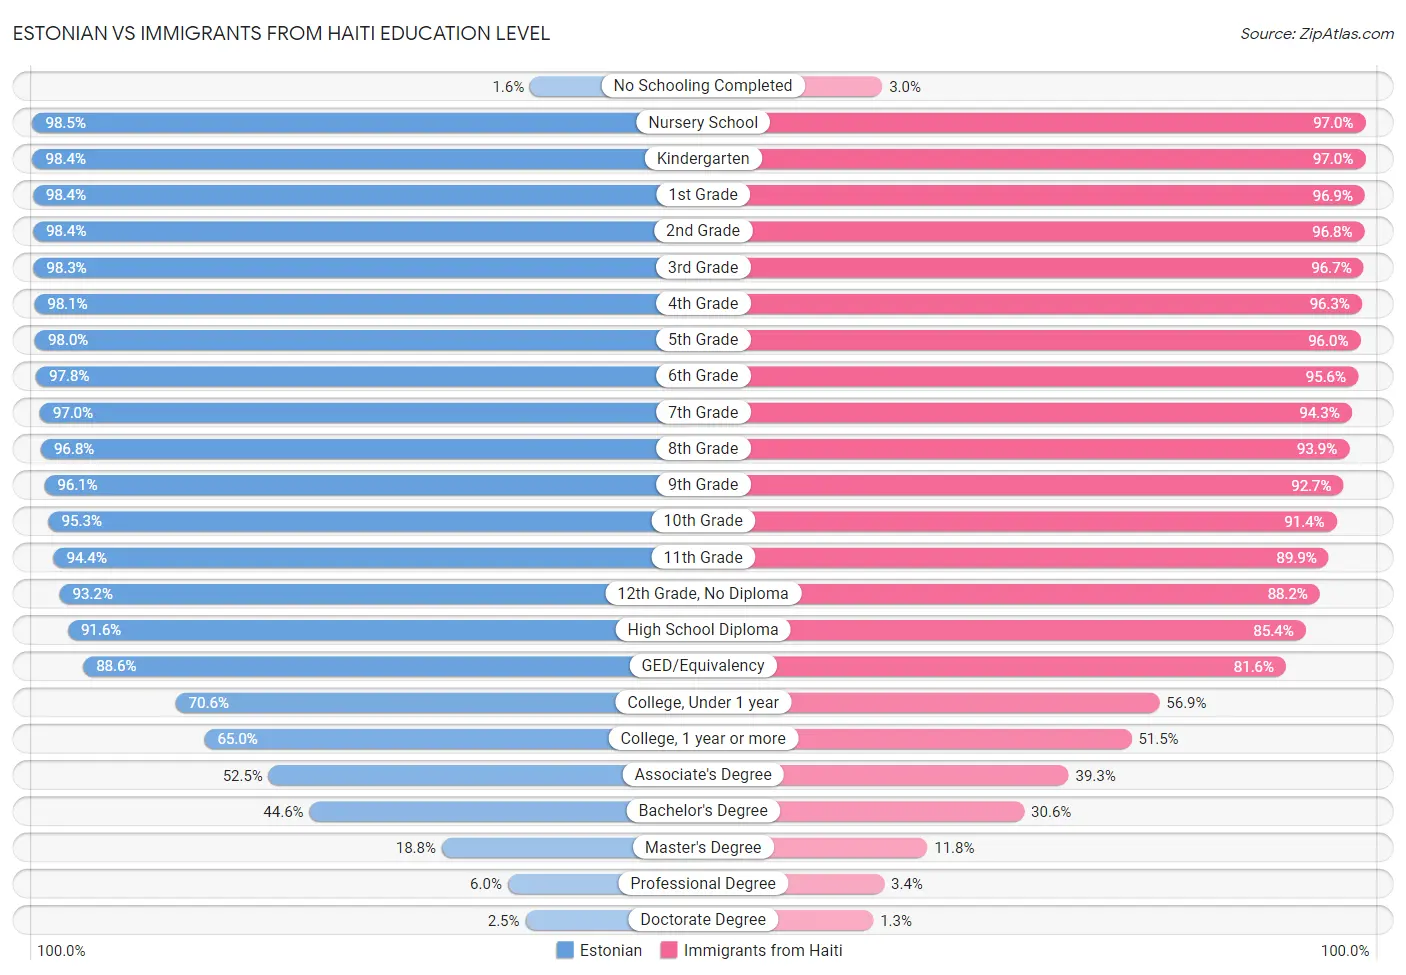 Estonian vs Immigrants from Haiti Education Level